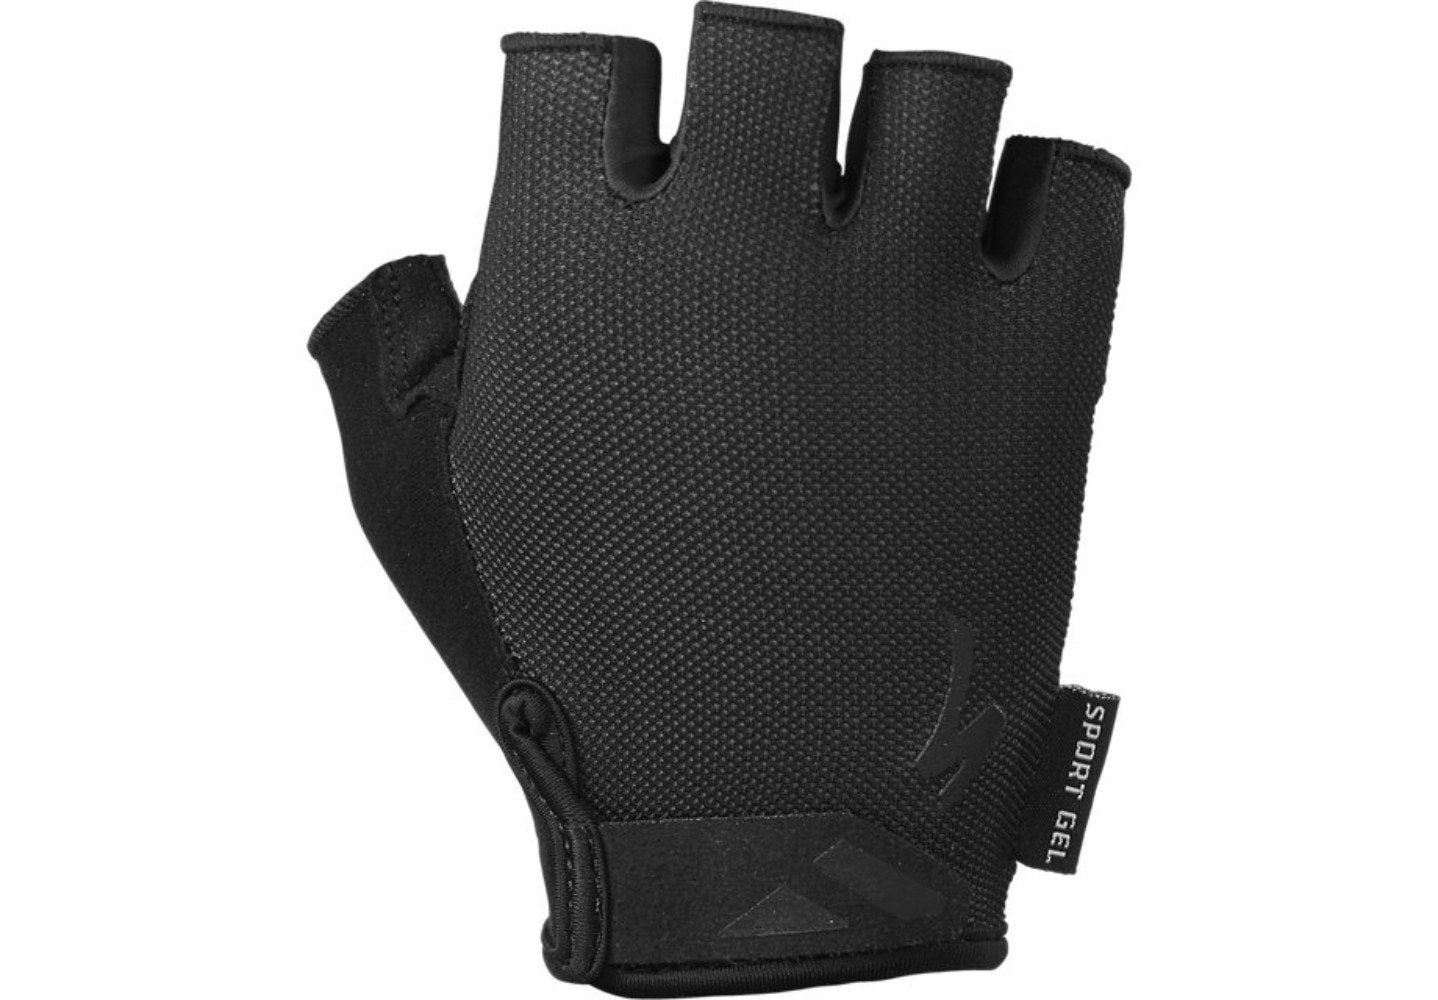 Specialized Body Geometry Sport Gel Ladies Cycling Gloves